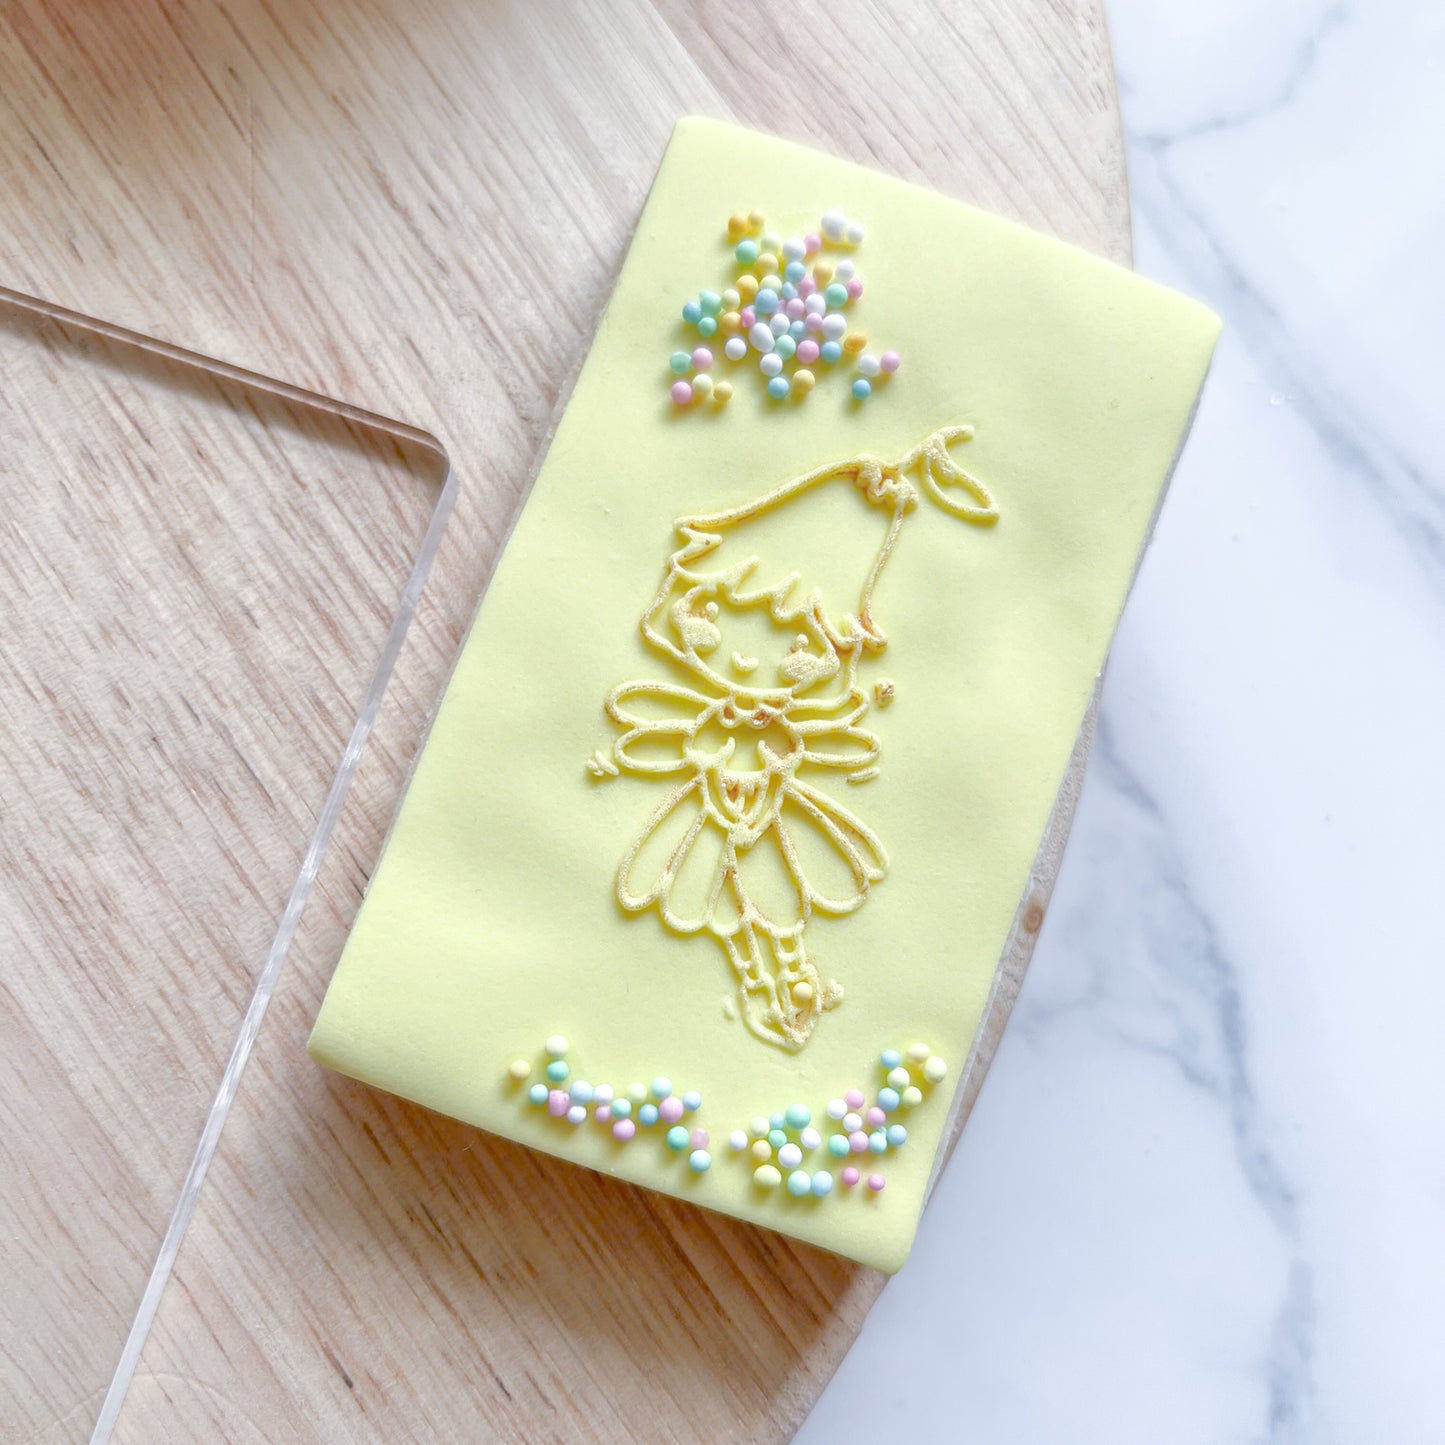 "Flower Fairy" Embossing Stamp